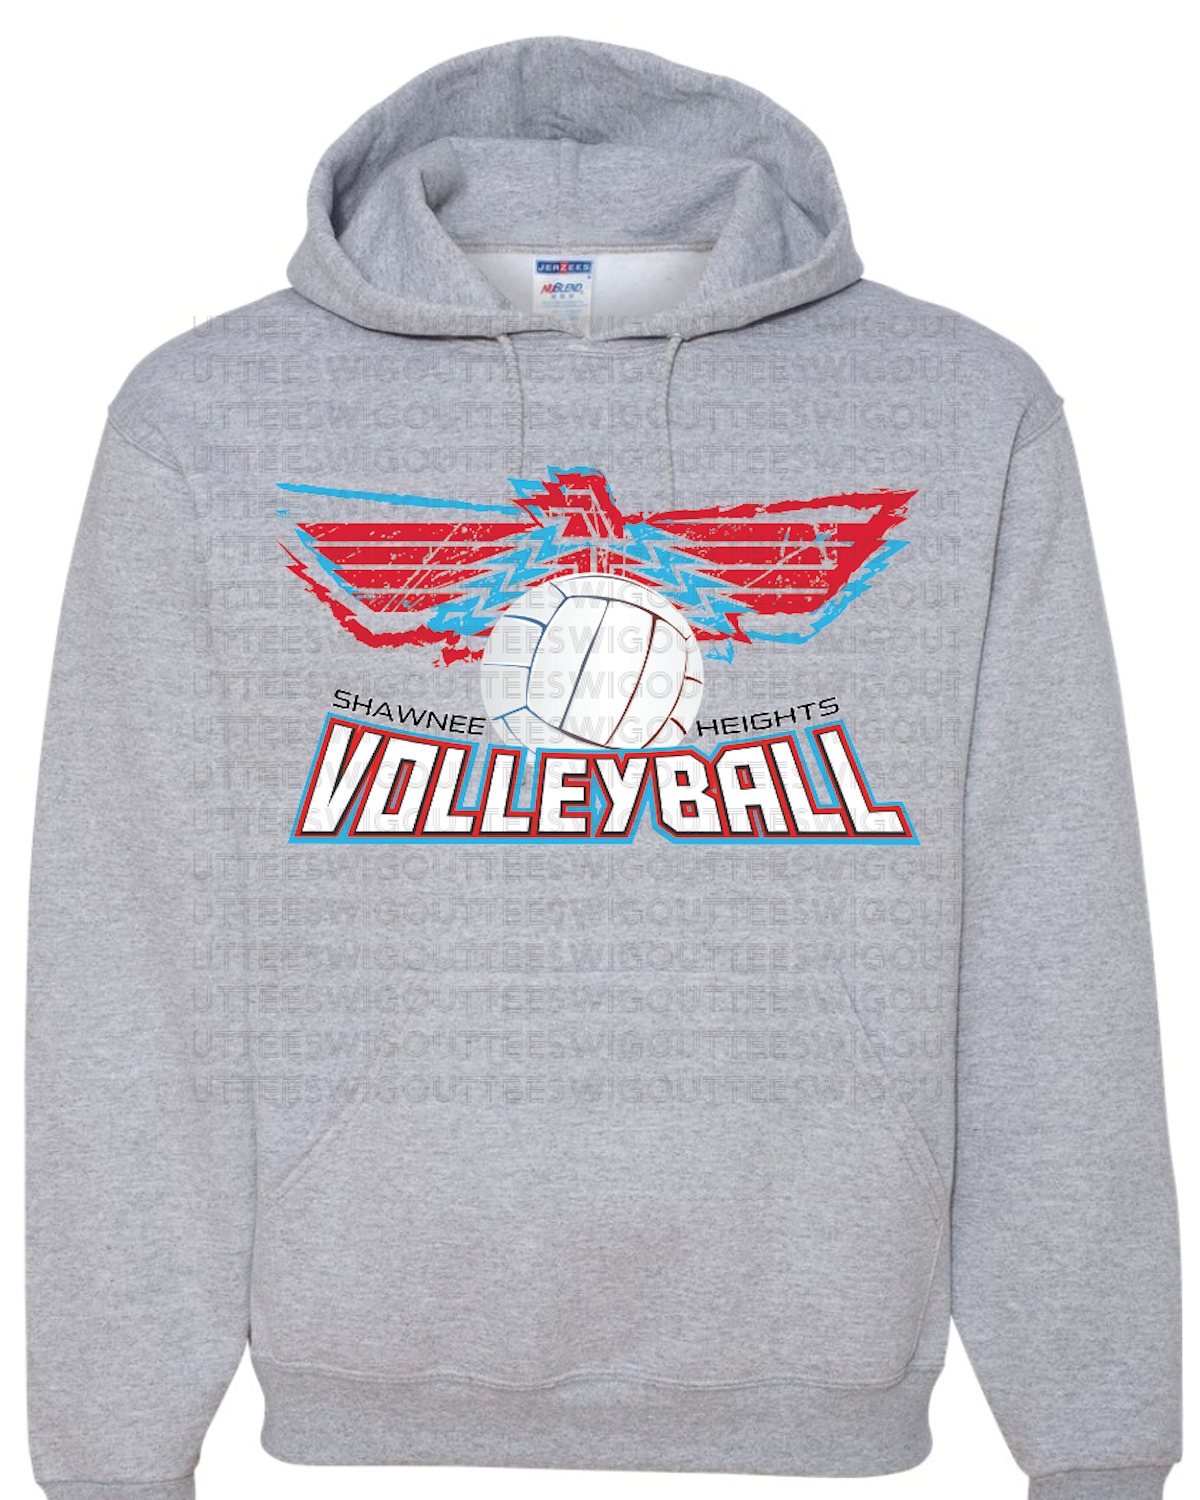 Shawnee Heights Volleyball Jerzees Nublend Hooded Sweatshirt